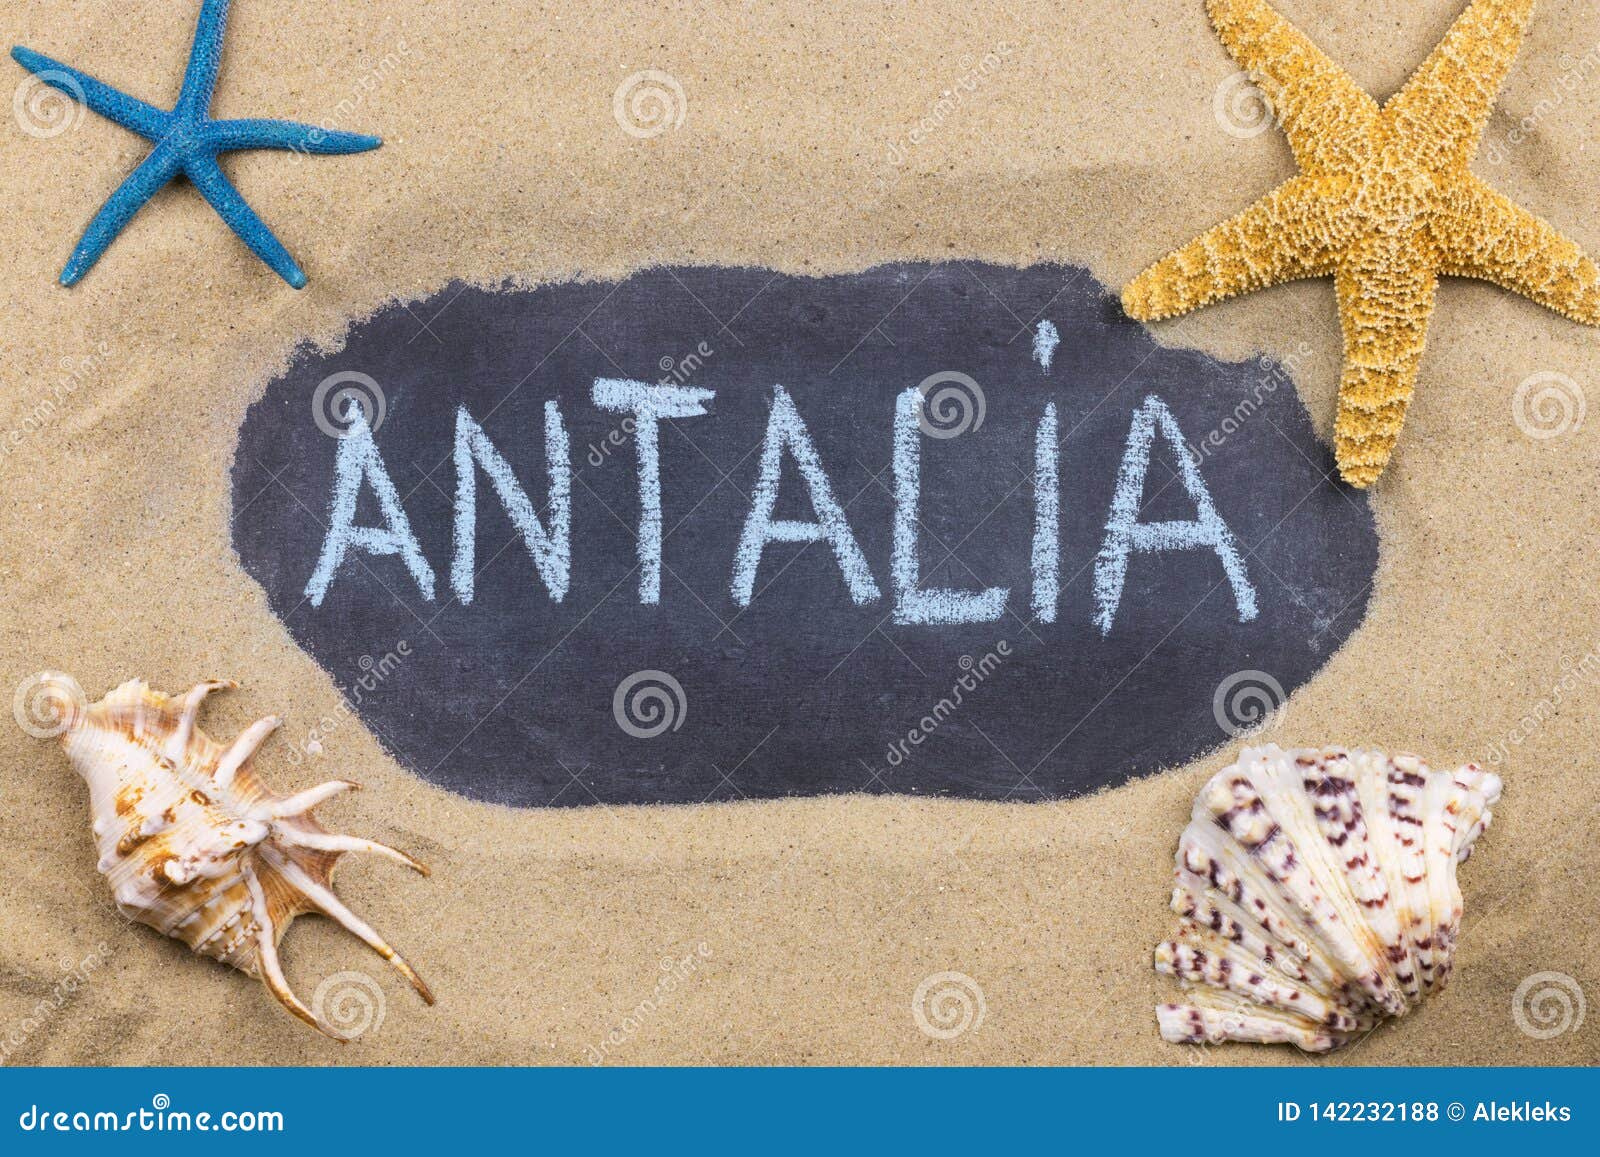 handwritten word antalia written in chalk, among seashells and starfishes